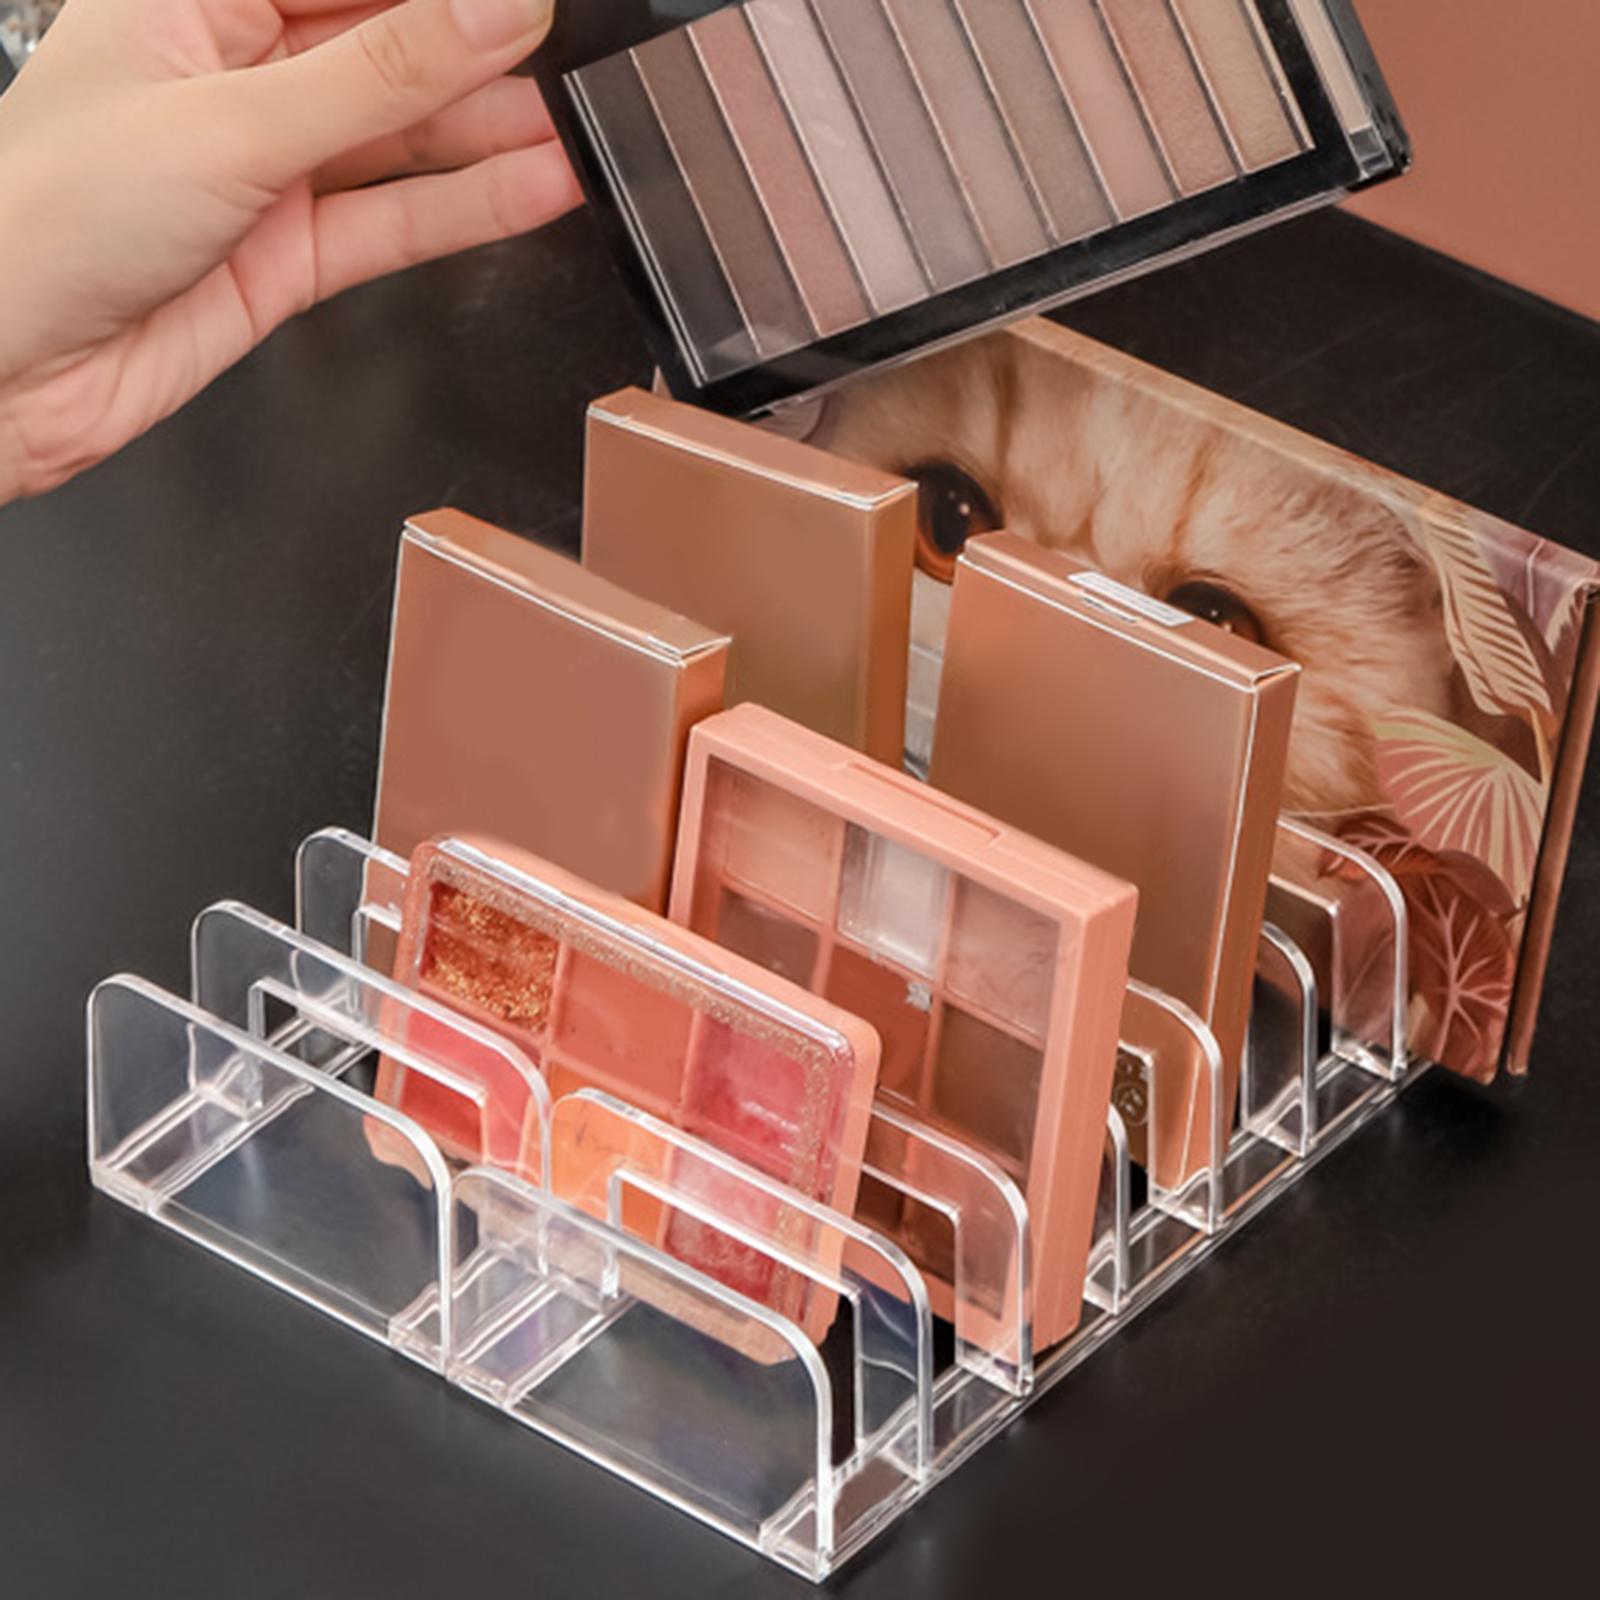 3X Makeup Organizer Eyeshadow Palettes Blush Holder for Dresser Vanity Cabinets